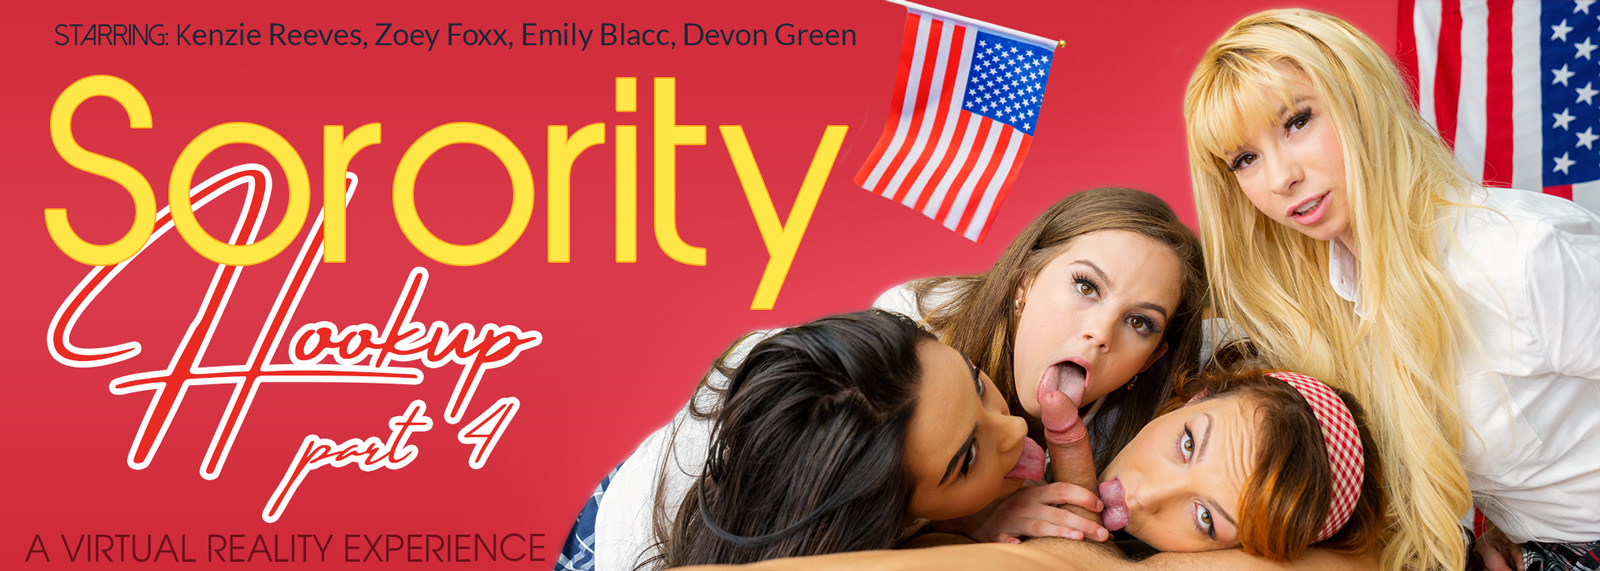 Sorority Hookup Part 4 - VR Porn Video, Starring: Emily Blacc, Zoey Foxx, Devon Green, Kenzie Reeves